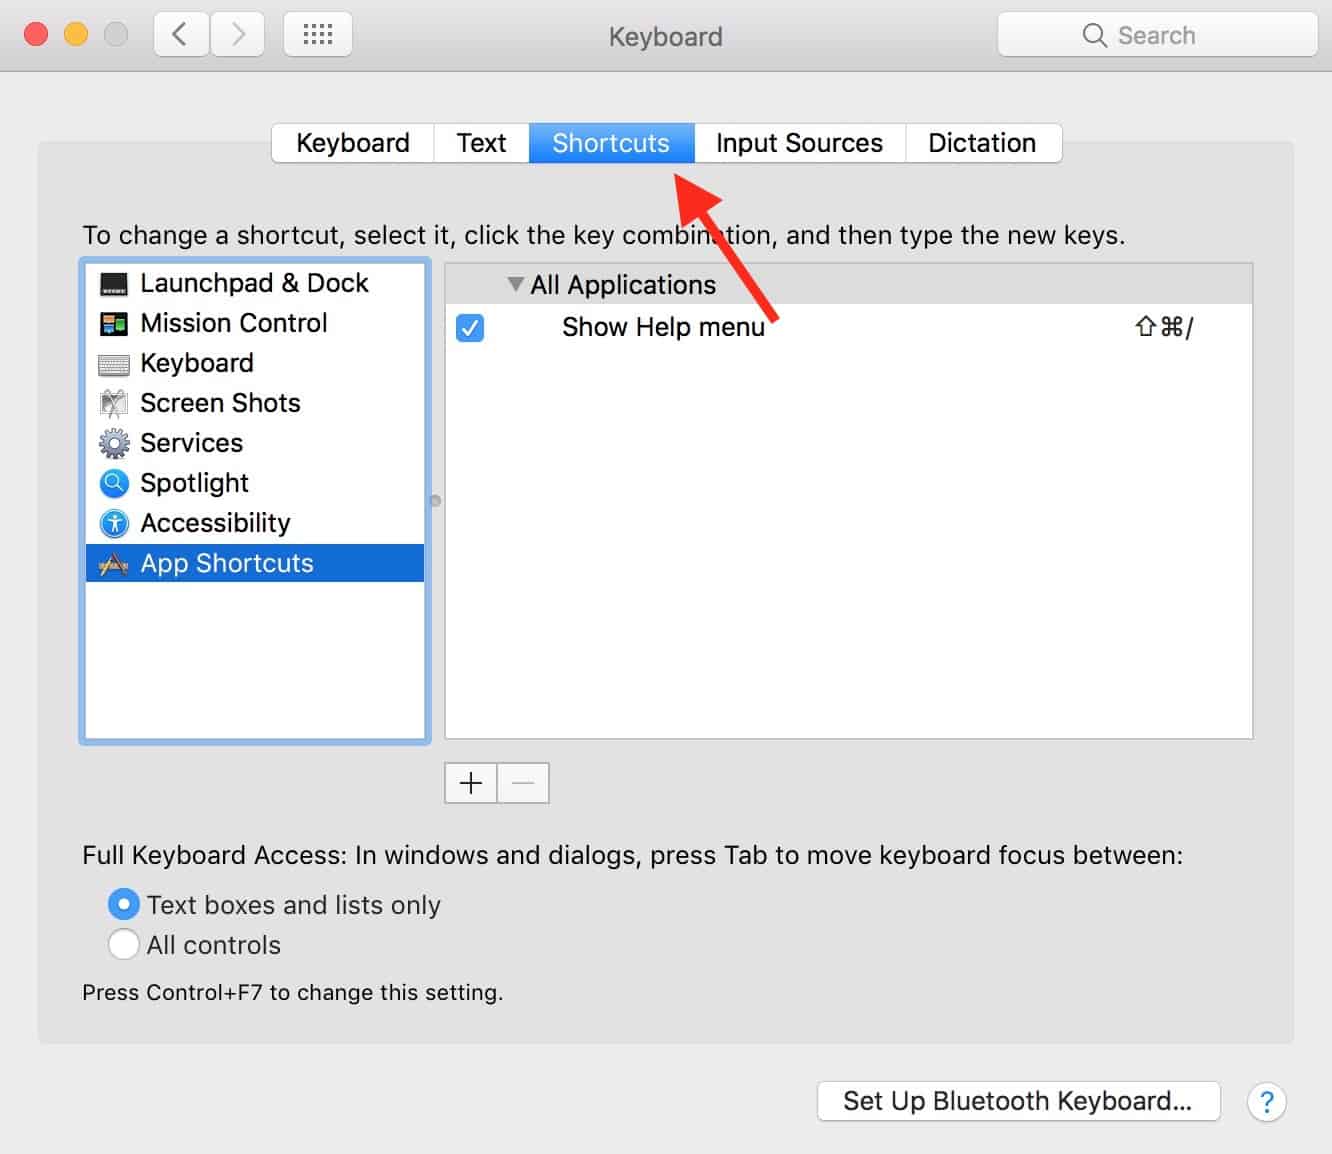 Shortcuts Tab in Keyboard preferences for adding custom keyboard shortcuts